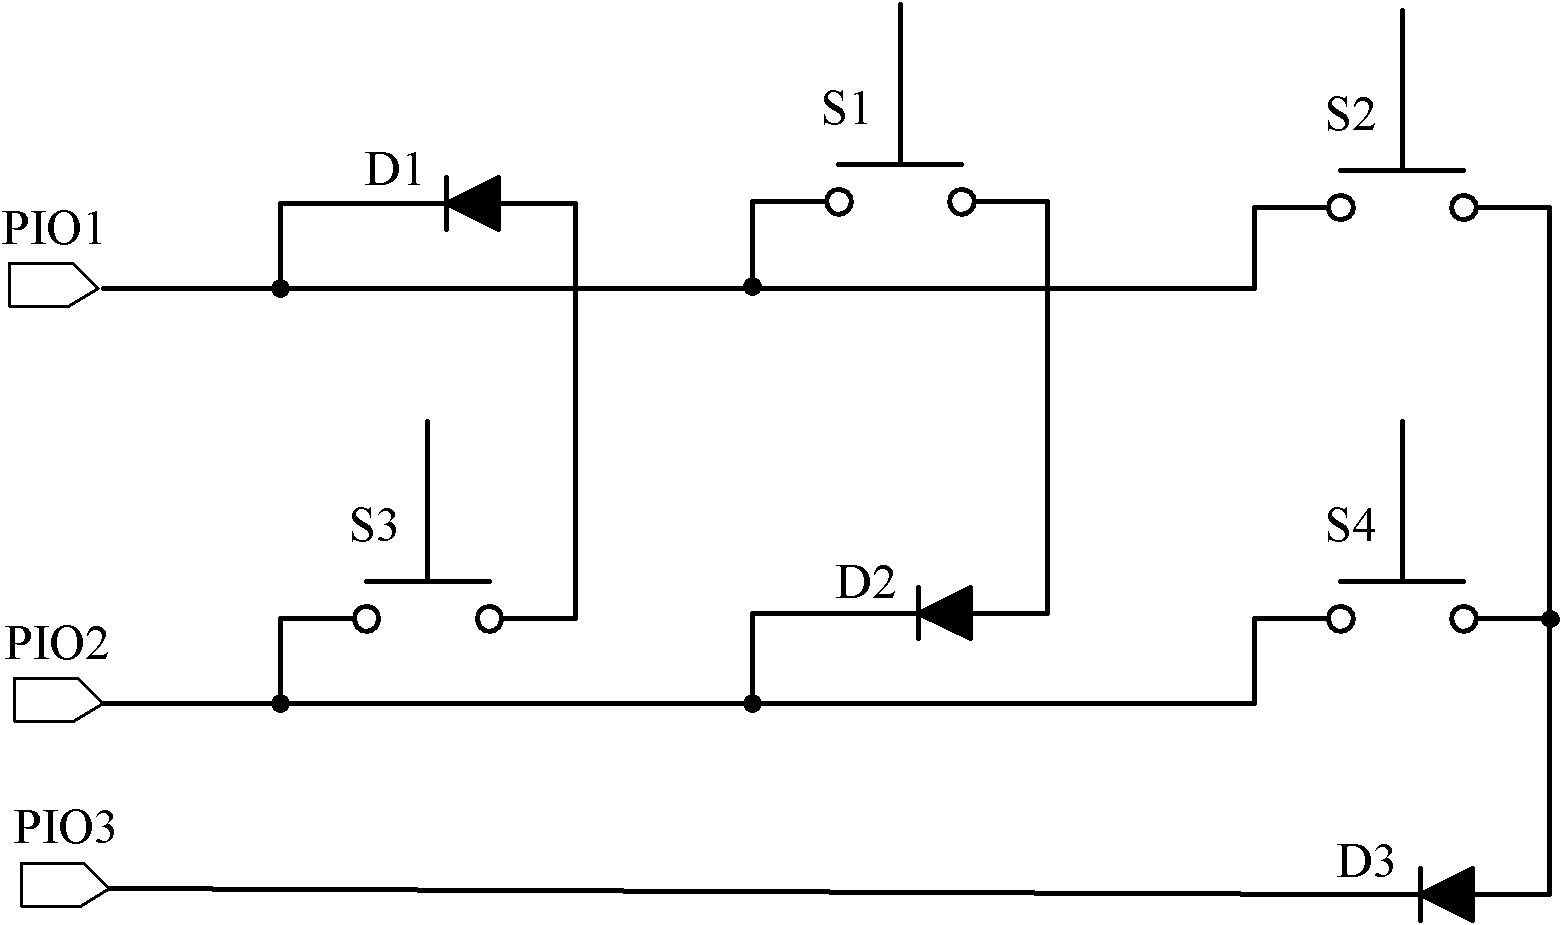 Key identifying circuit, key identifying method and STB (Set Top Box)